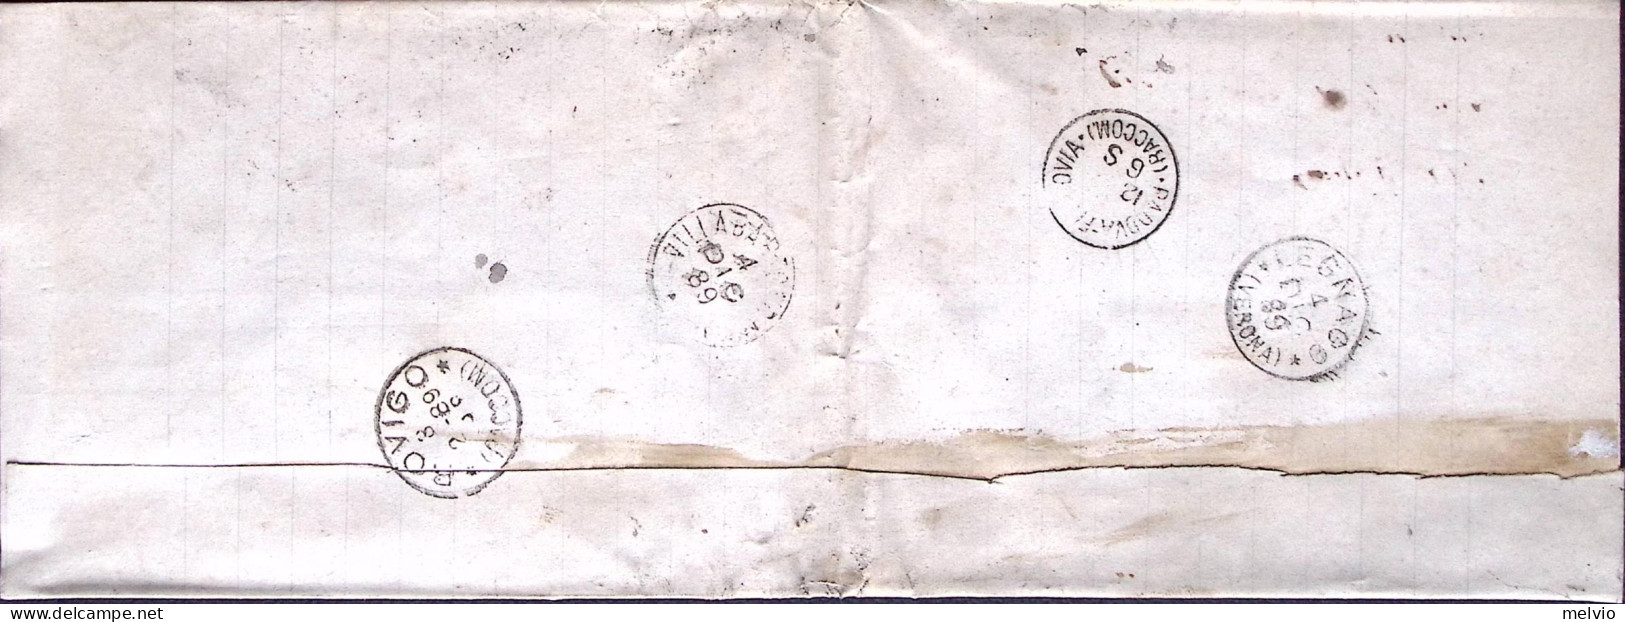 1889-effigie C.45 Isolato Su Carte Legali Raccomandate (busta Grande) Padova (2. - Poststempel